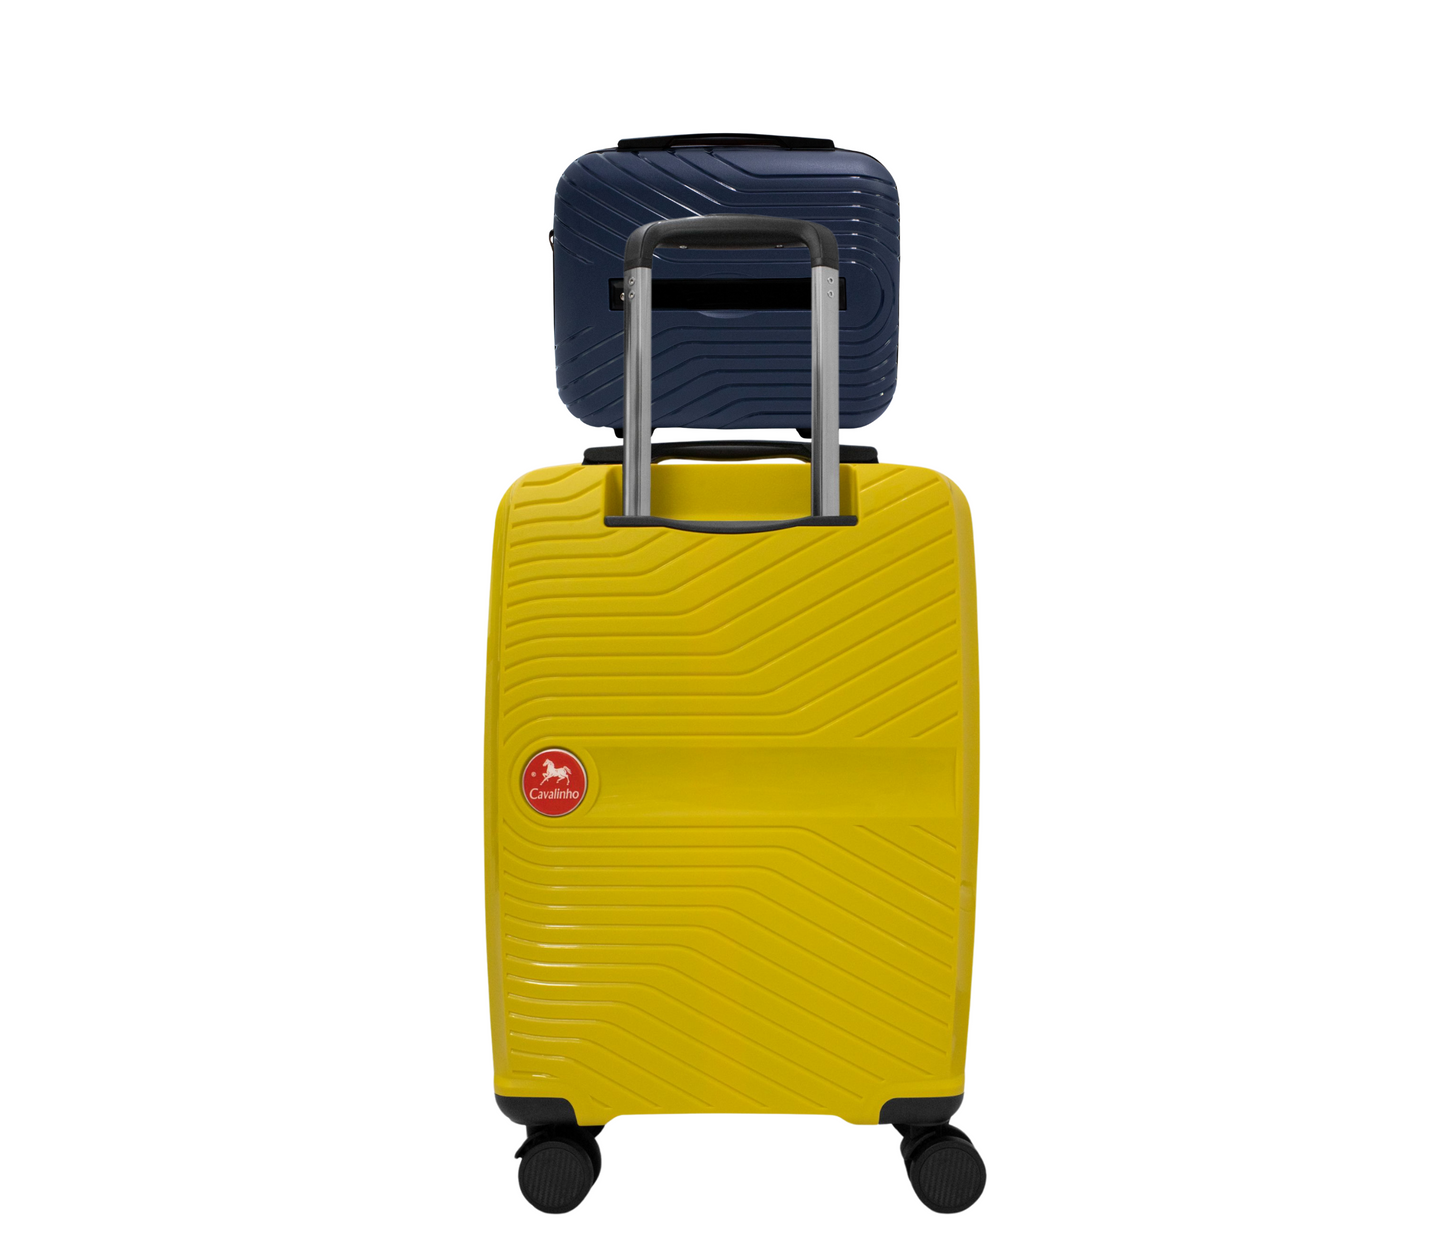 Cavalinho Canada & USA Colorful 2 Piece Luggage Set (15" & 19") - Navy Yellow - 68020004.0308.S1519._2